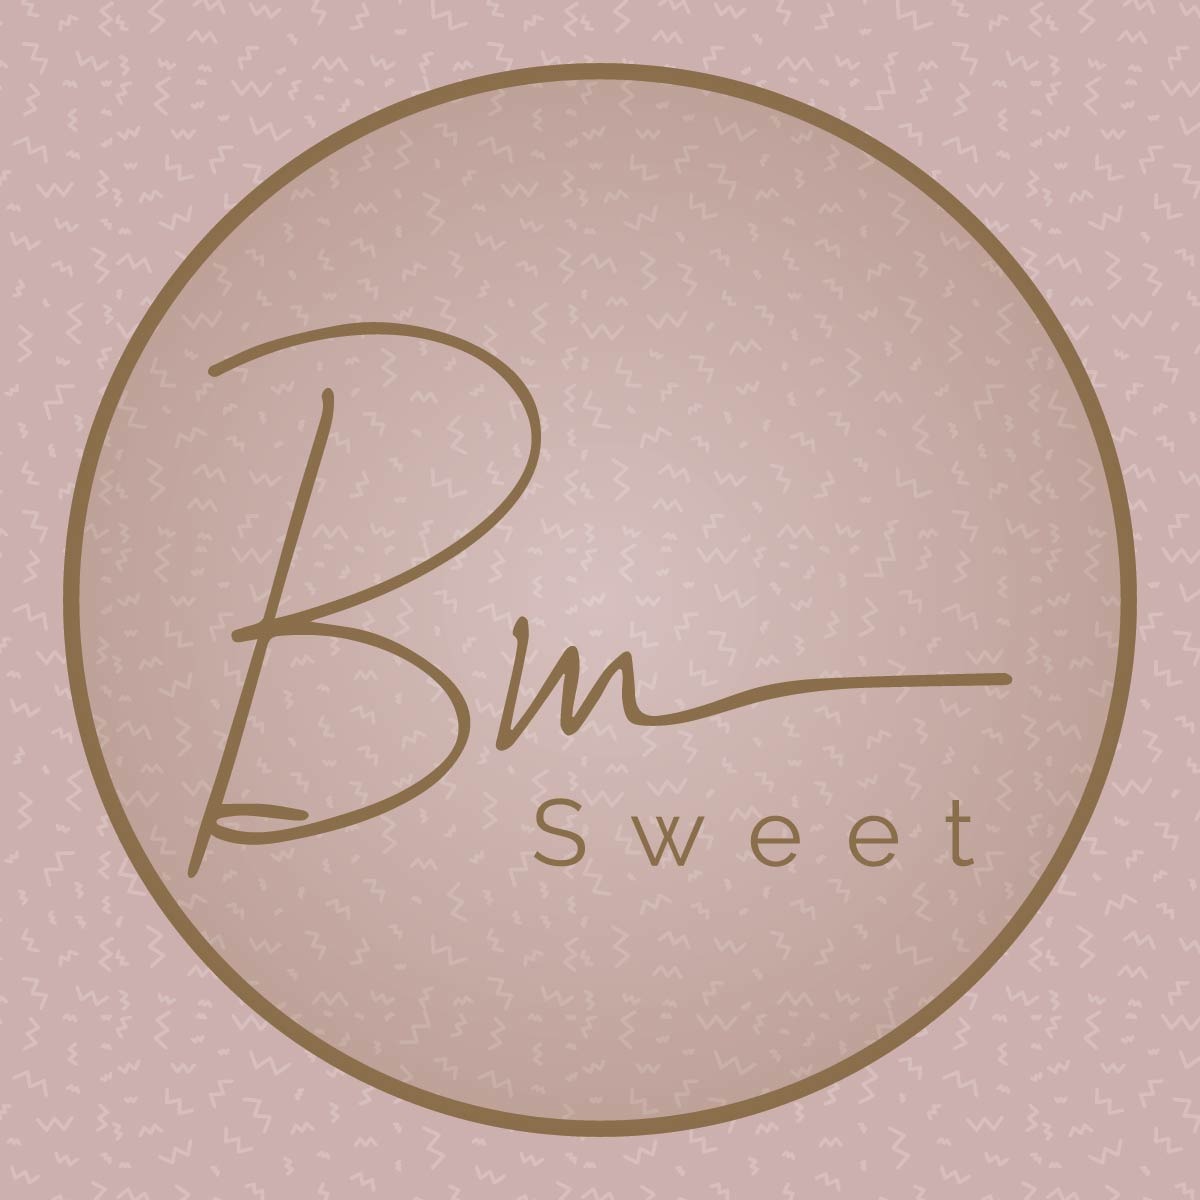 BM Sweet